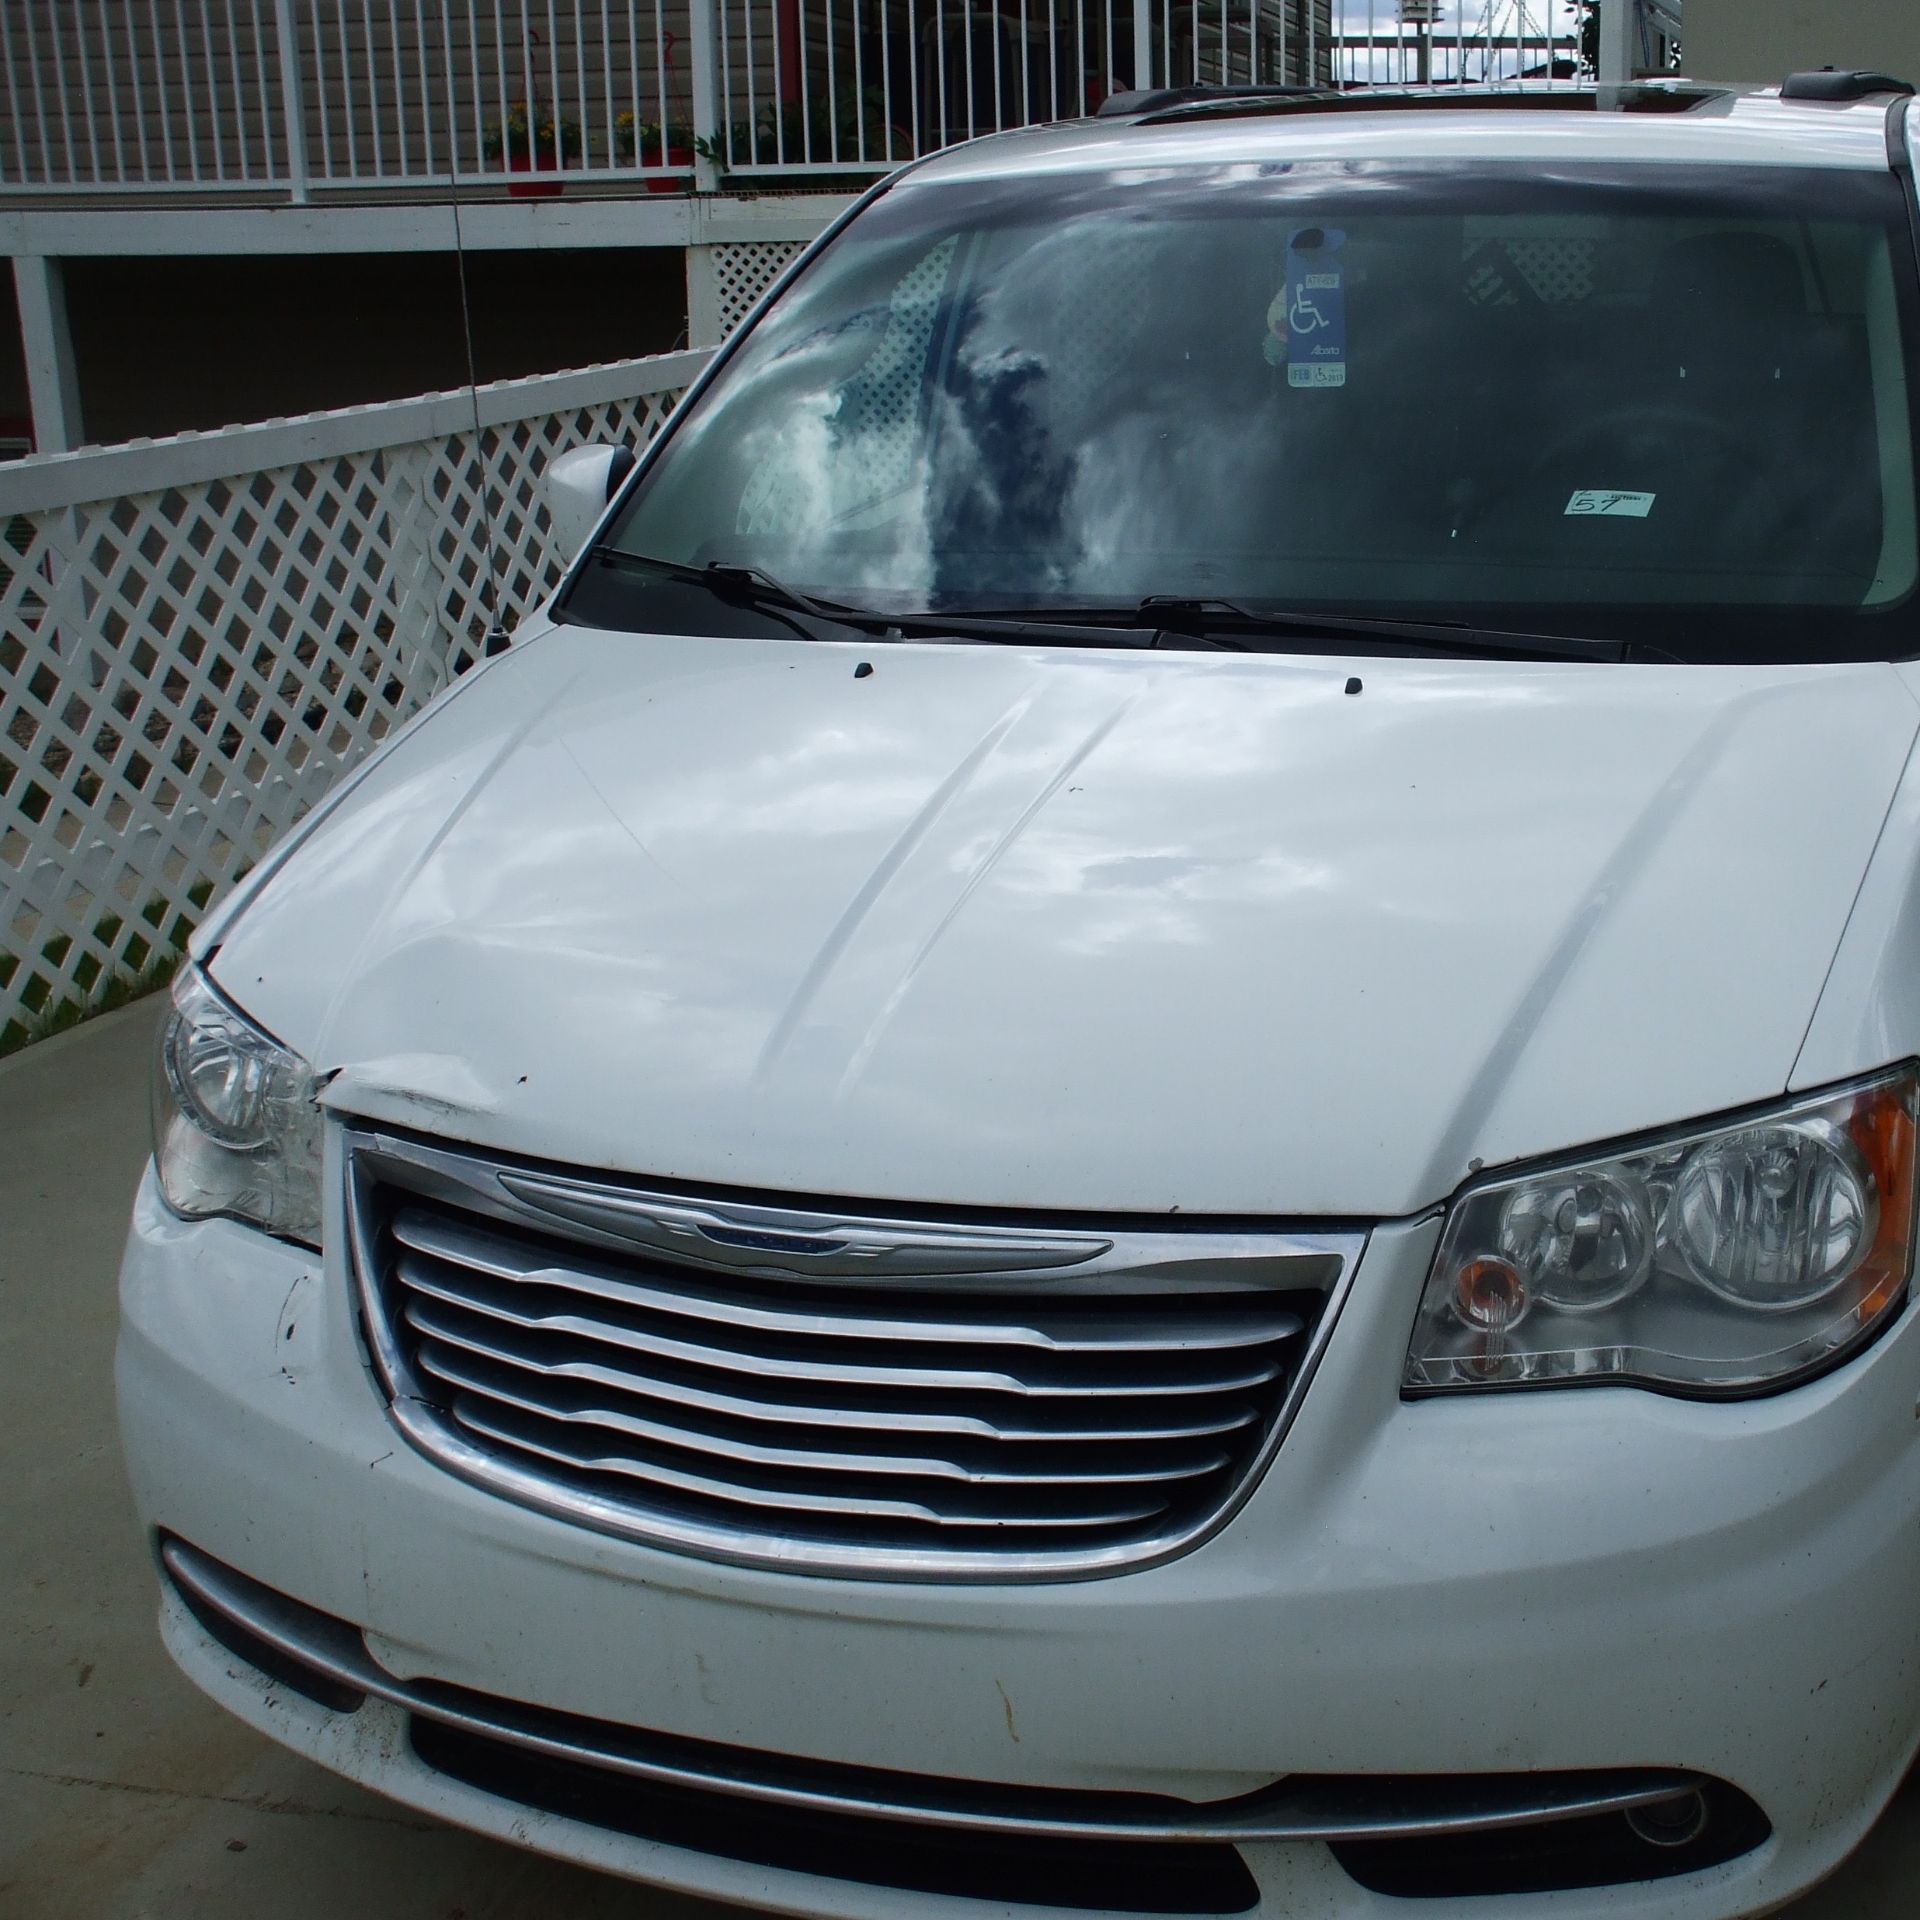 2014 Chrysler Town & Country Van, fully loaded, white, 282453 km - Image 2 of 7